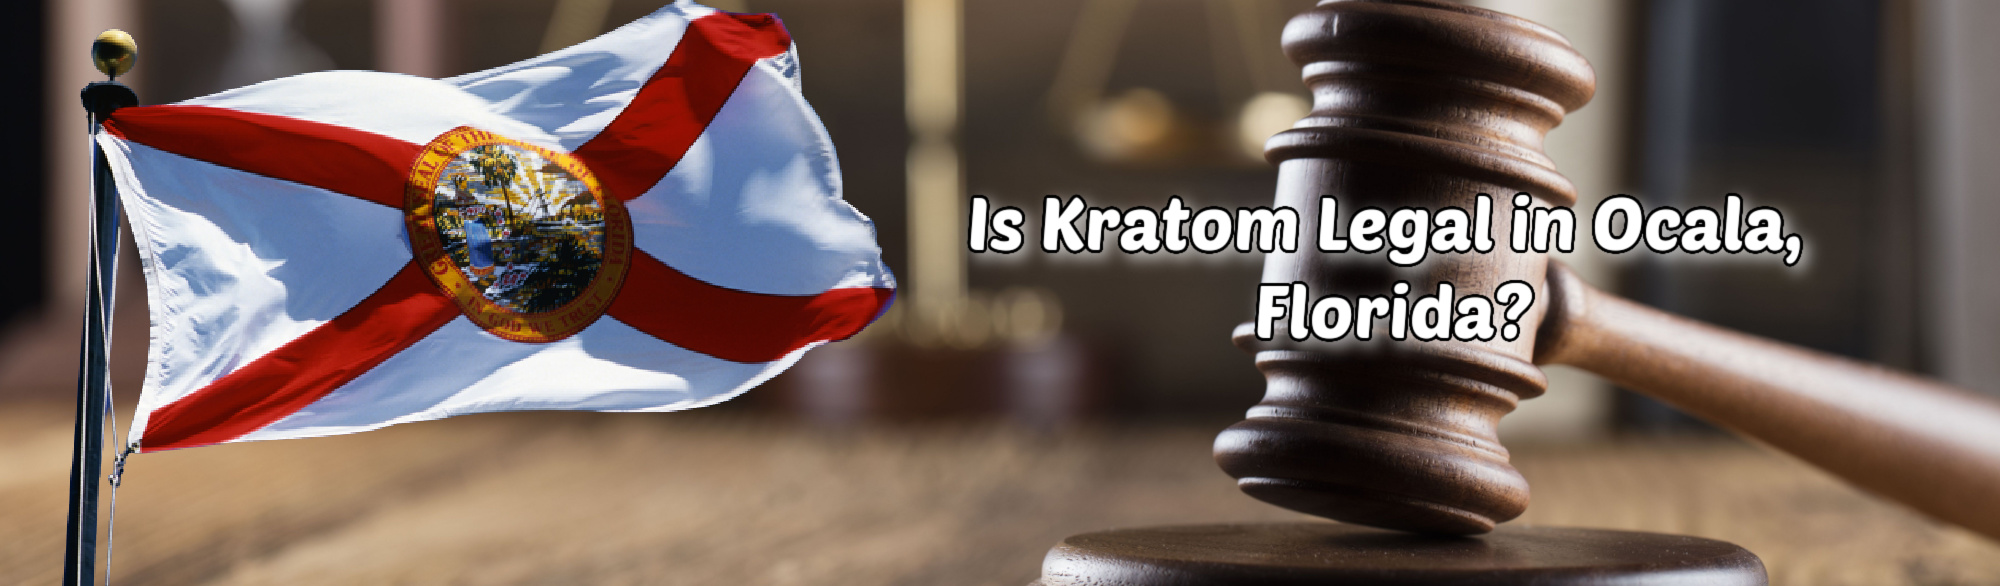 image of is kratom legal in ocala florida